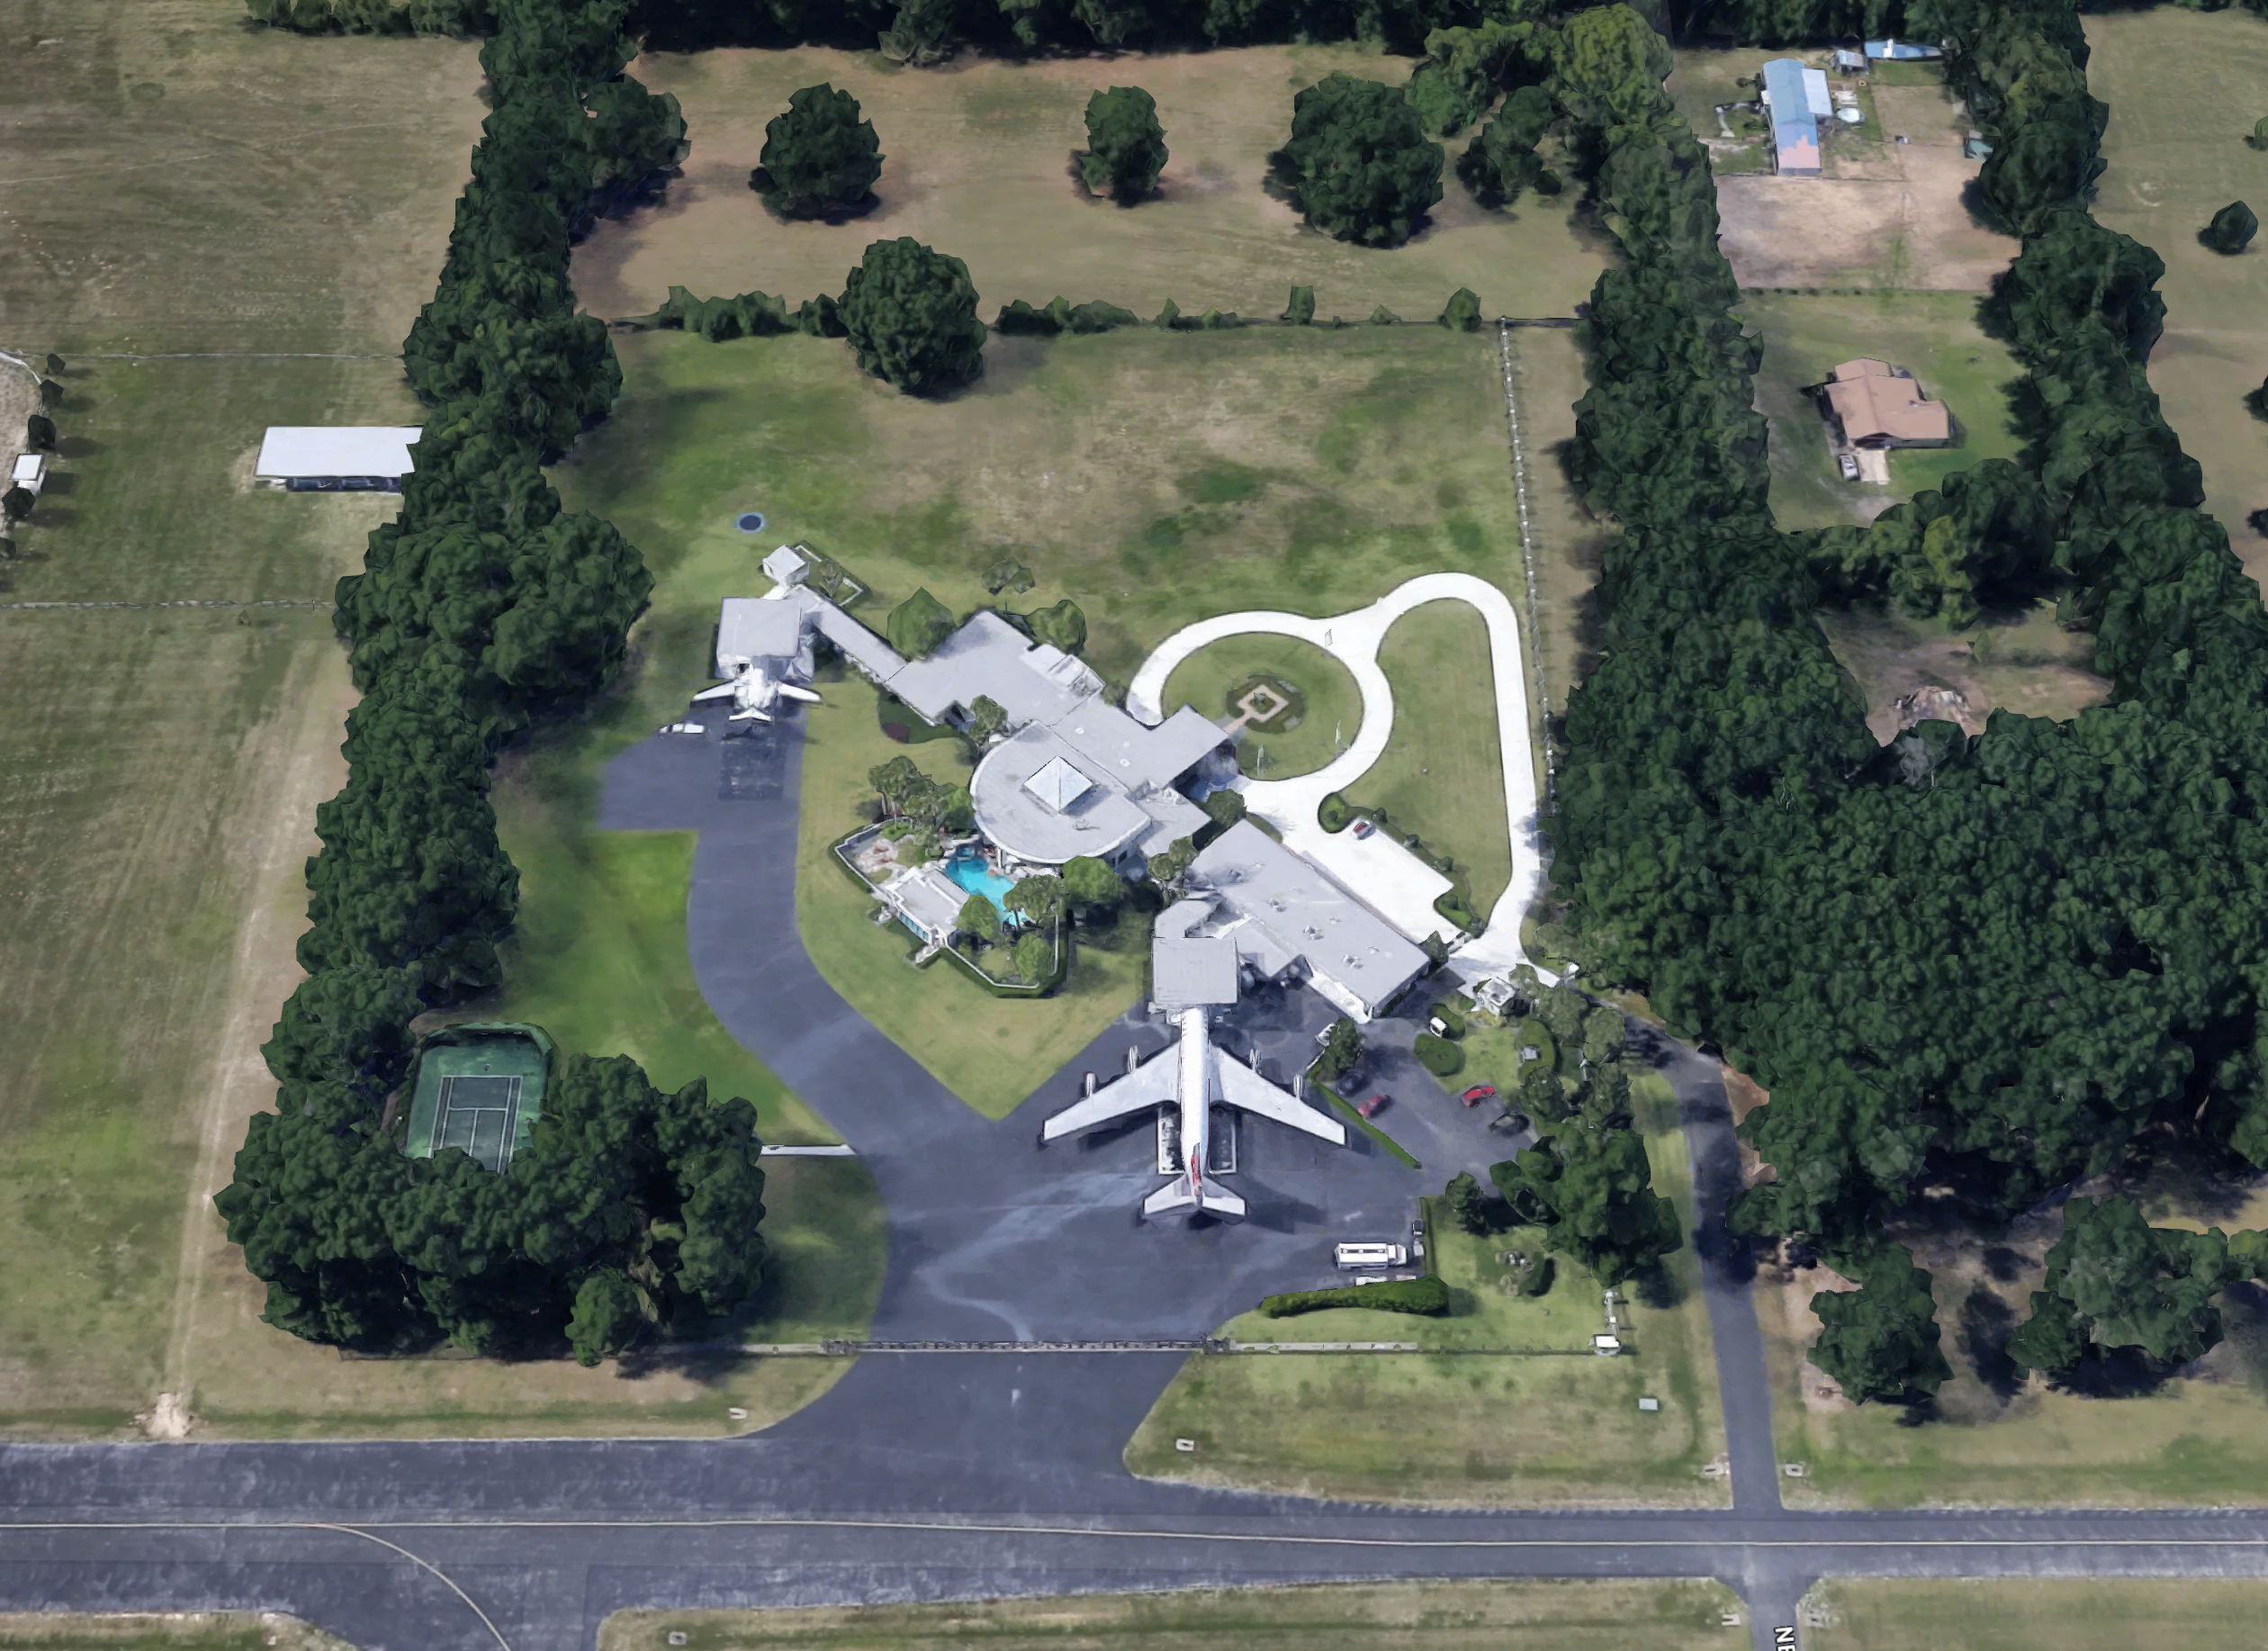 An aerial view of John travolta's house in Florida.